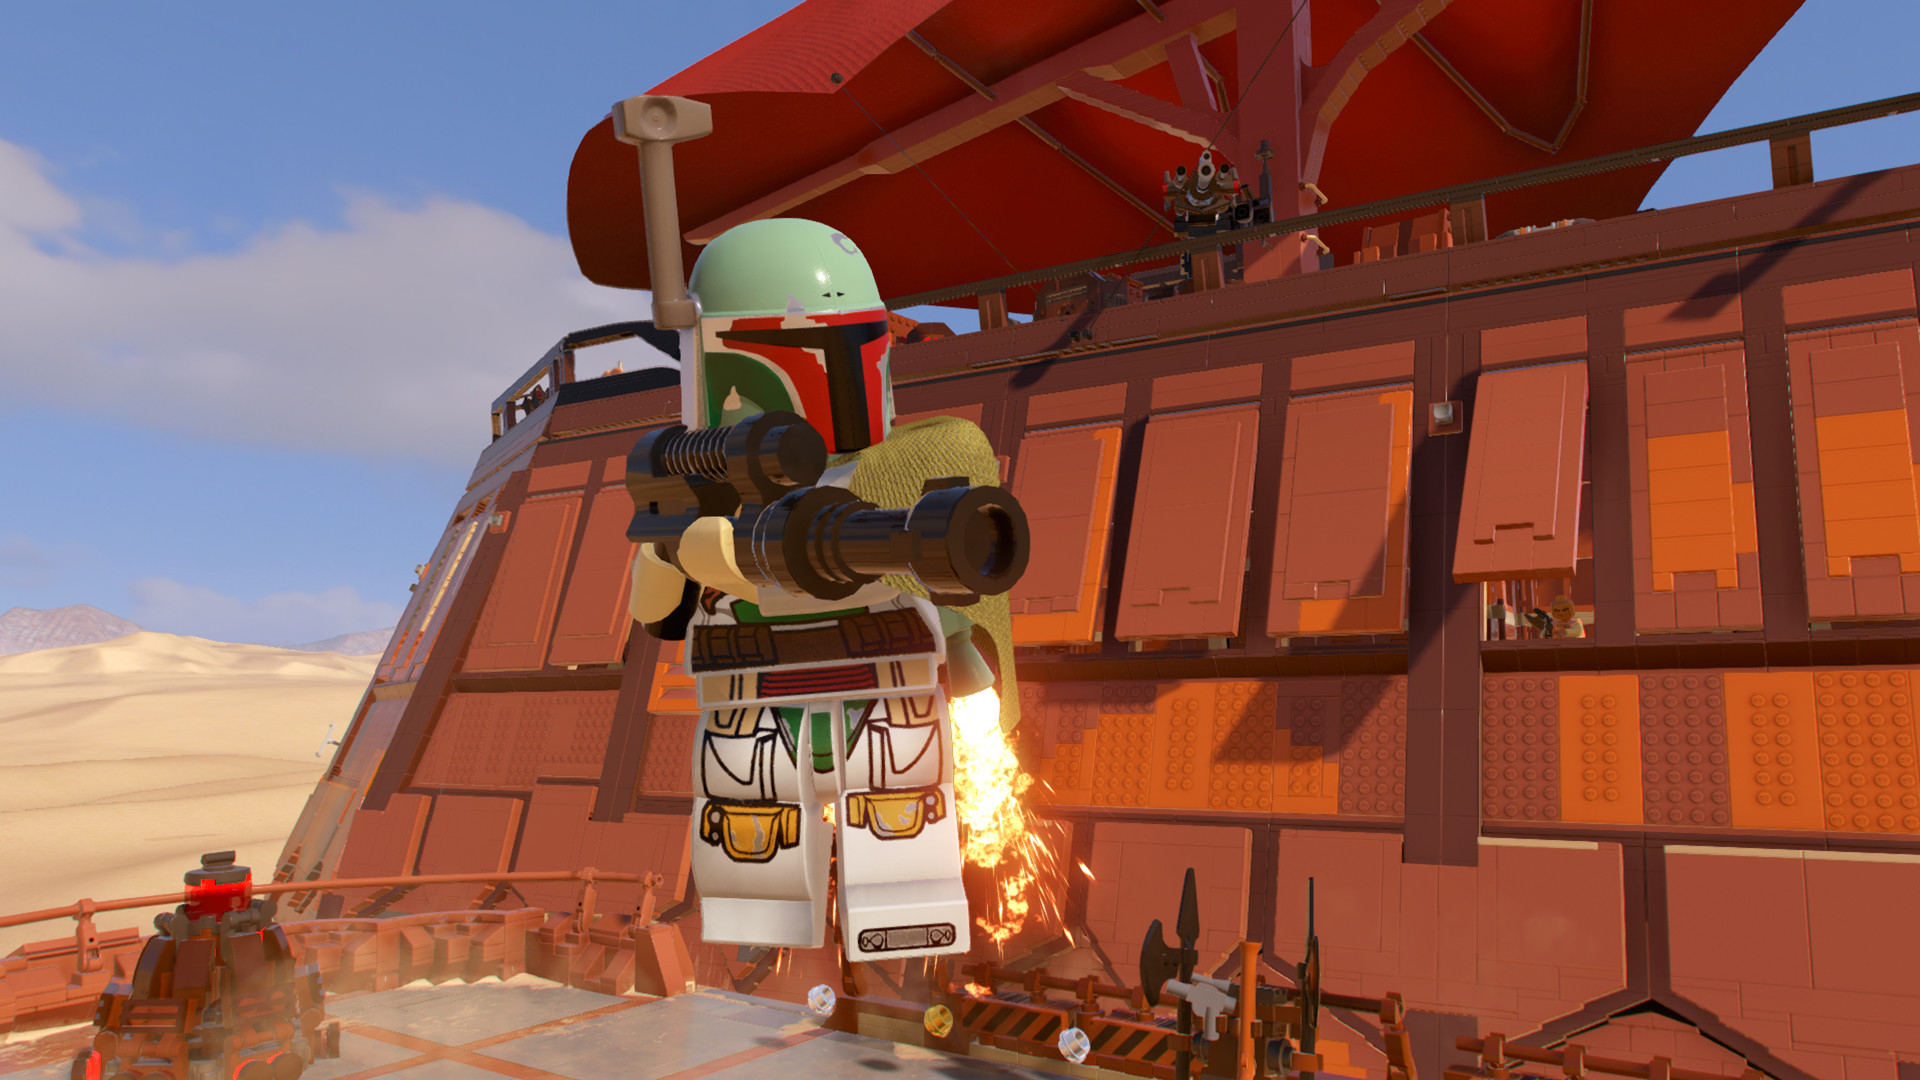 LEGO Star Wars: The Skywalker Saga PlayStation 4 Account pixelpuffin.net Activation Link, $13.55